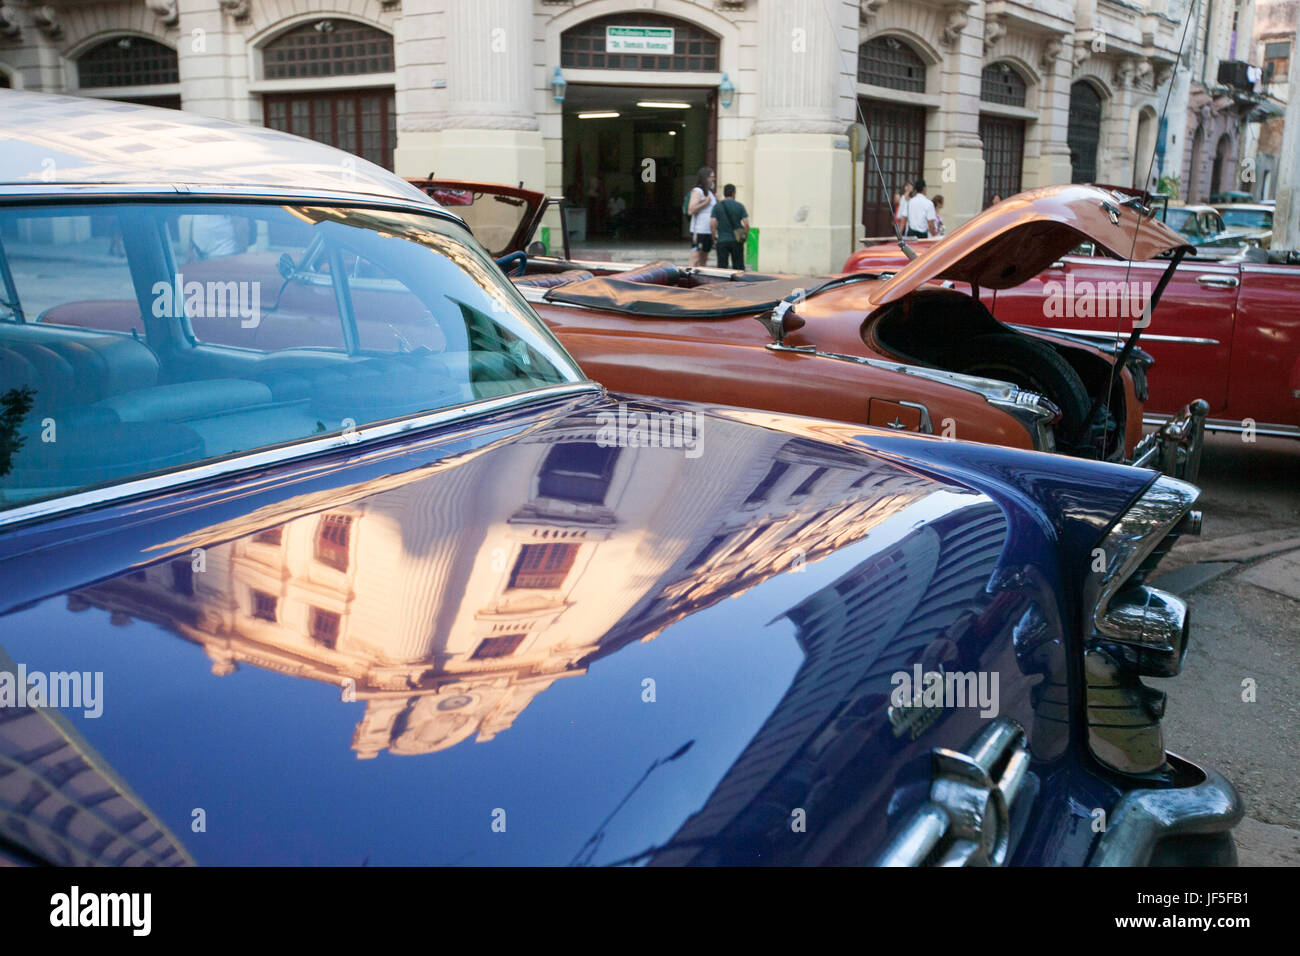 L'architettura cubana nel centro di Havana è riflessa dal tronco di una classica vettura americana. Foto Stock